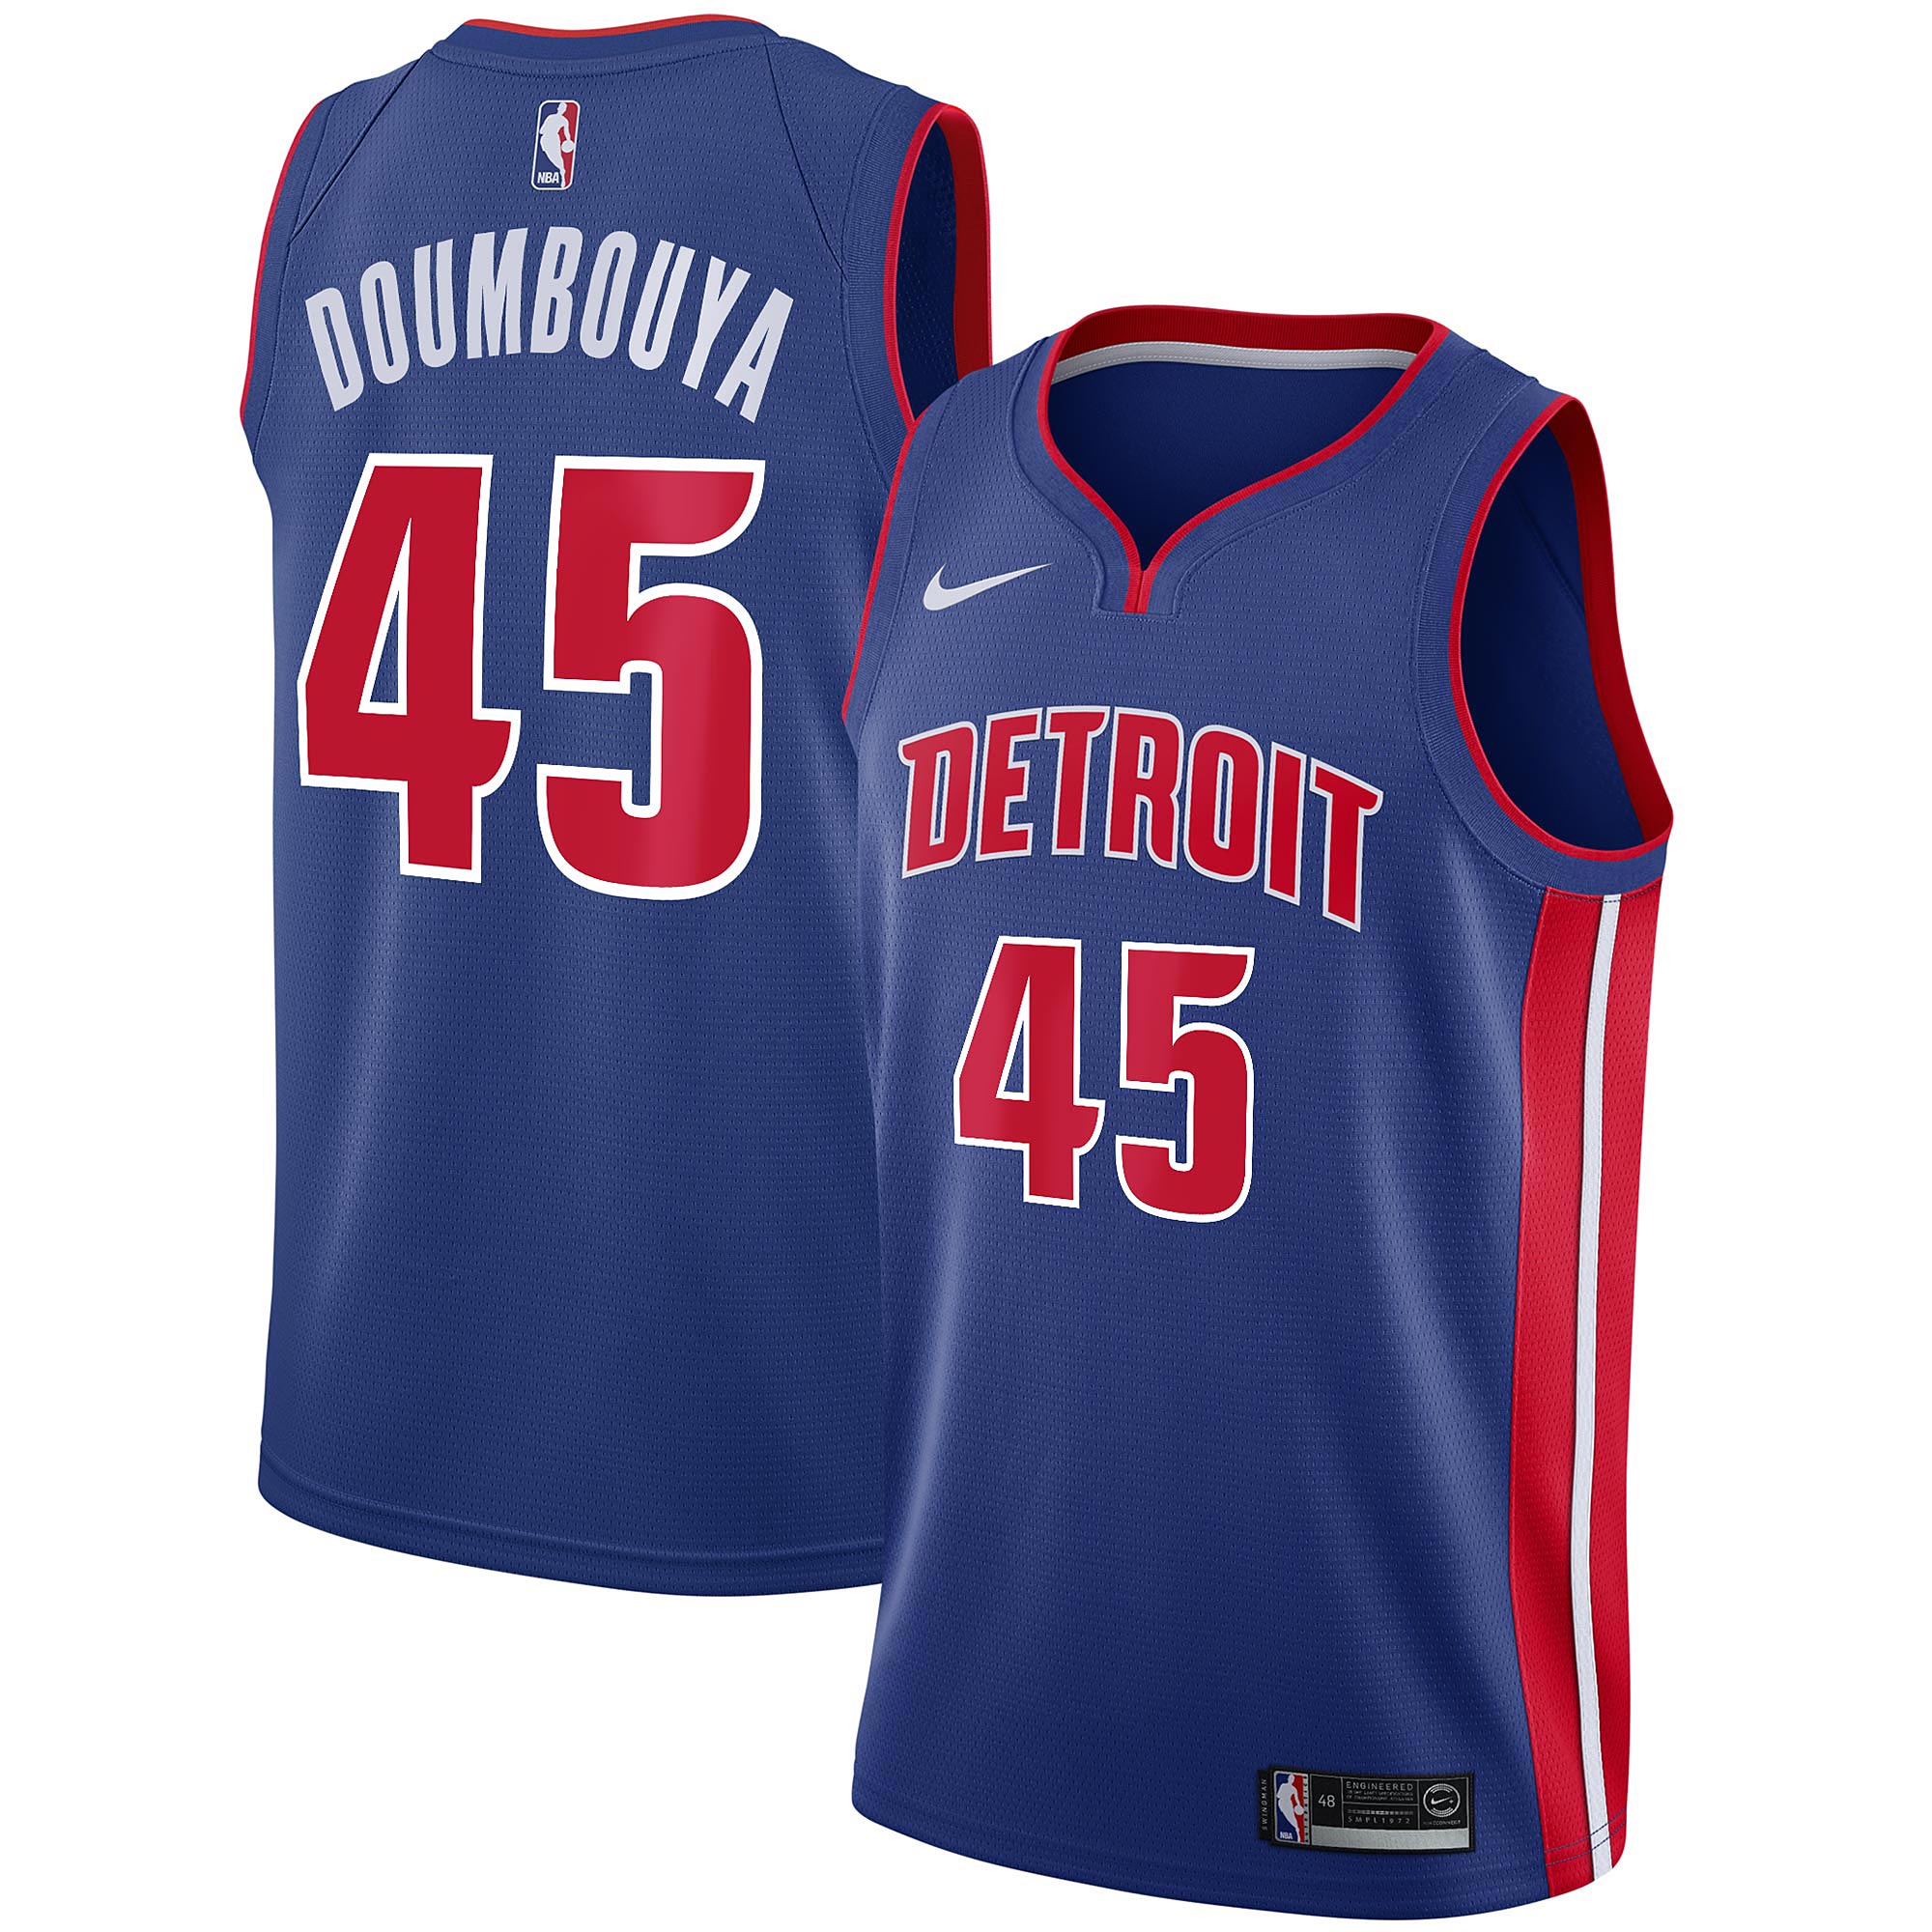 Detroit Pistons Nike Icon Swingman 